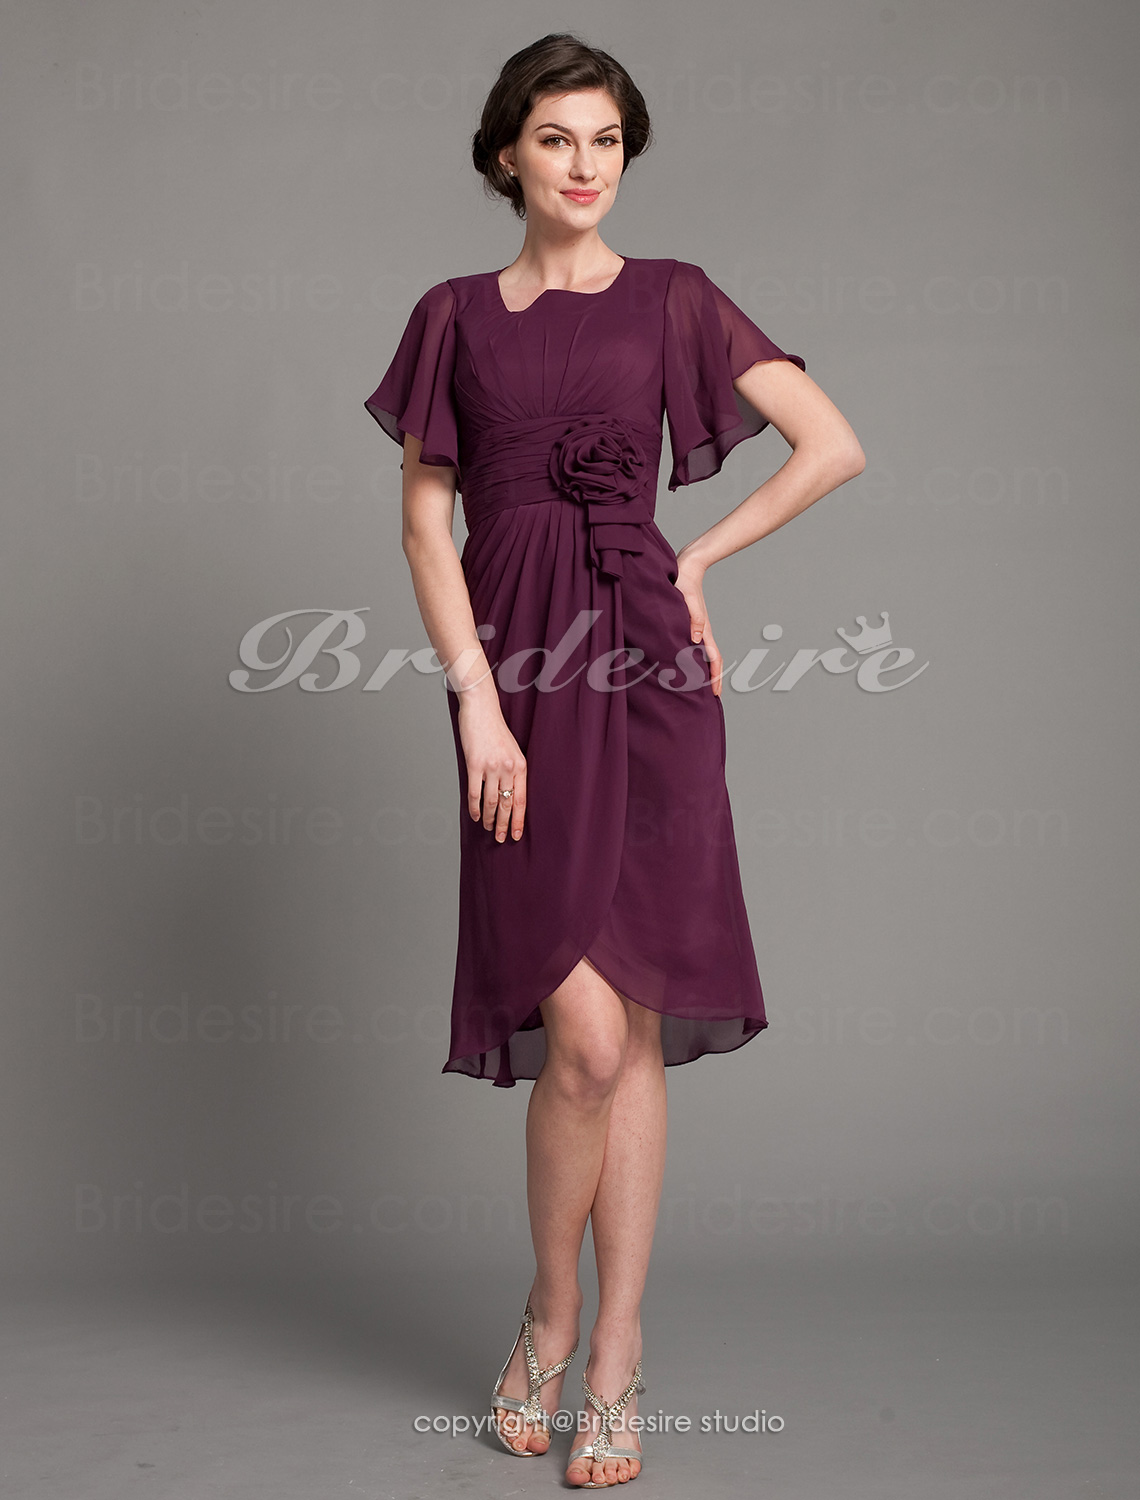 Sheath/Column Chiffon Square Knee-length Short Sleeve Cocktail Dress